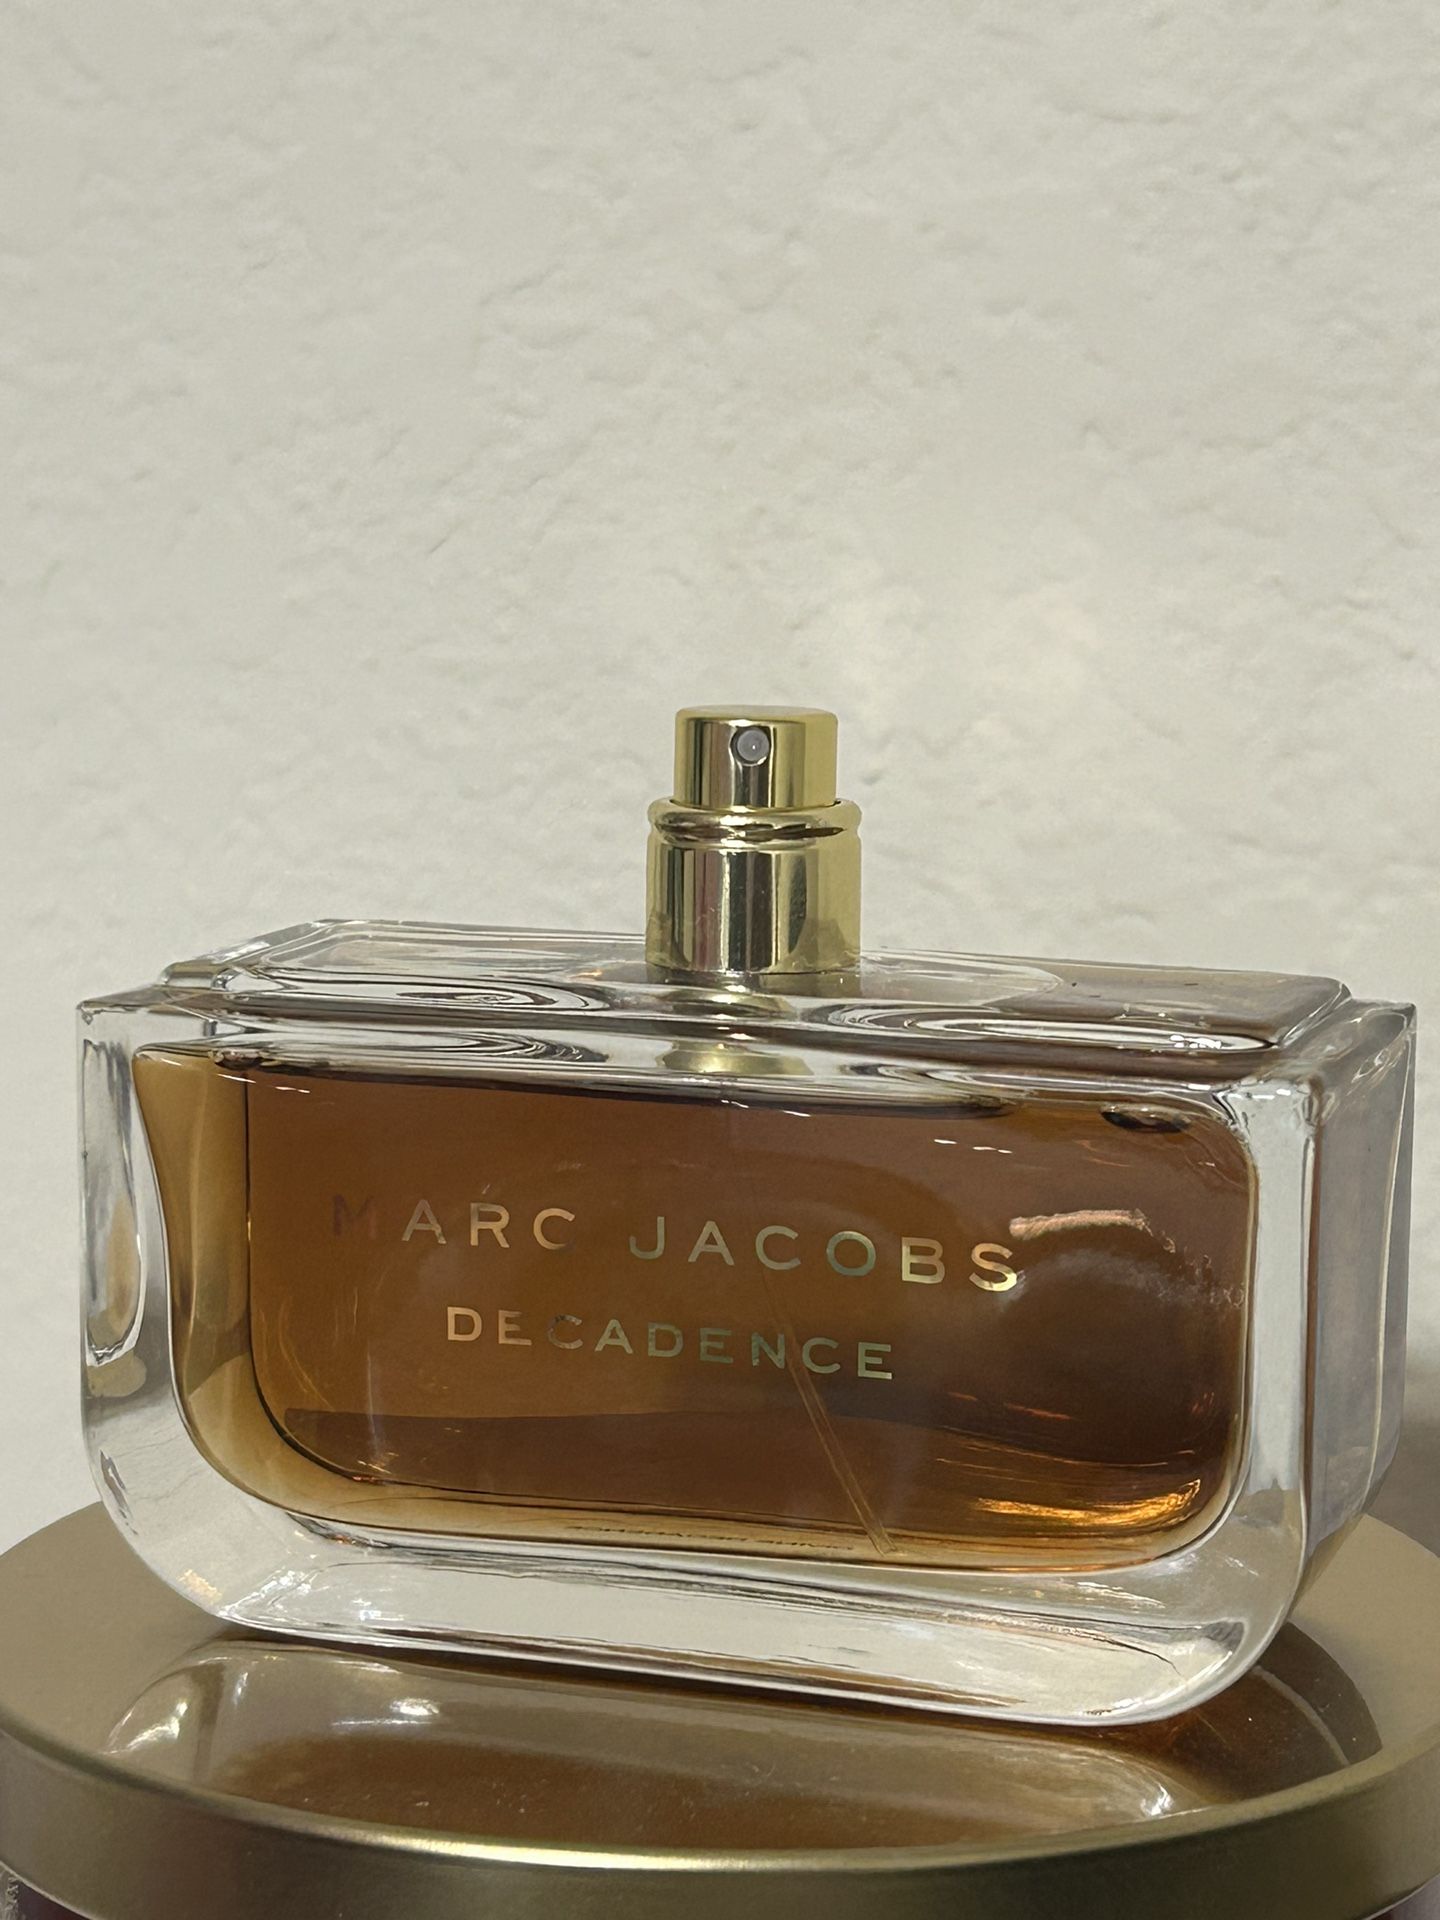 Decadence Marc Jacobs Women’s Perfume 3.4oz